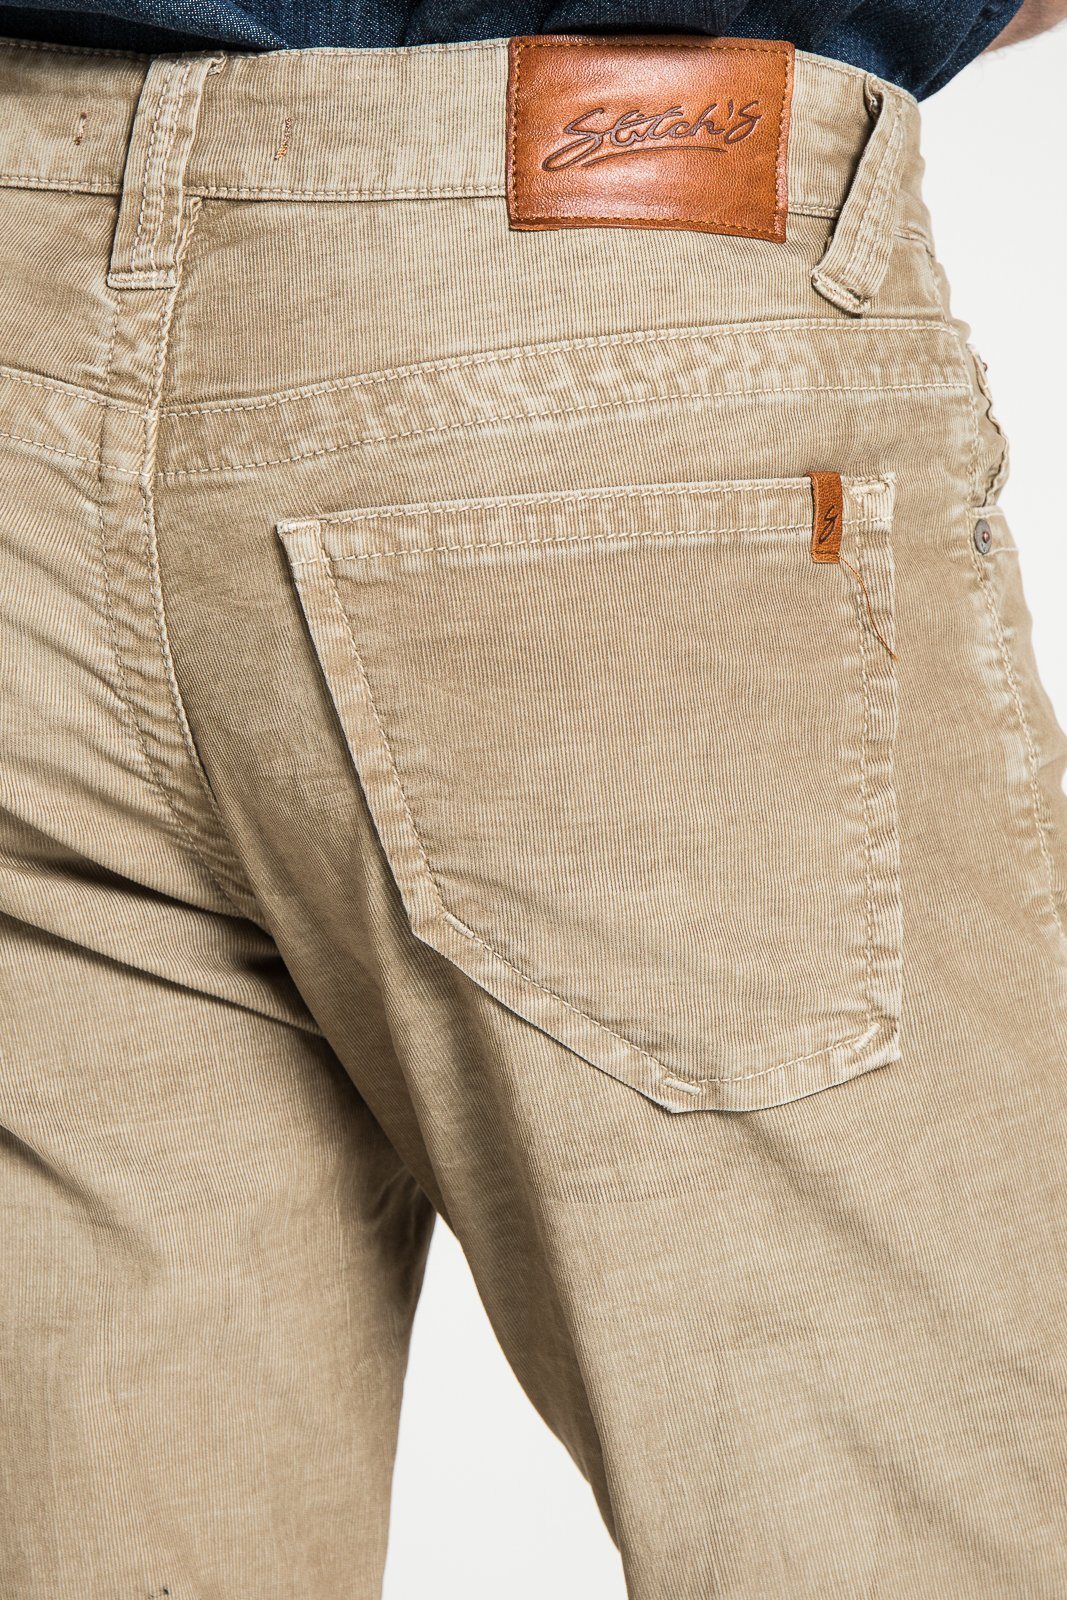 Corduroy jeans rustic man back pockets